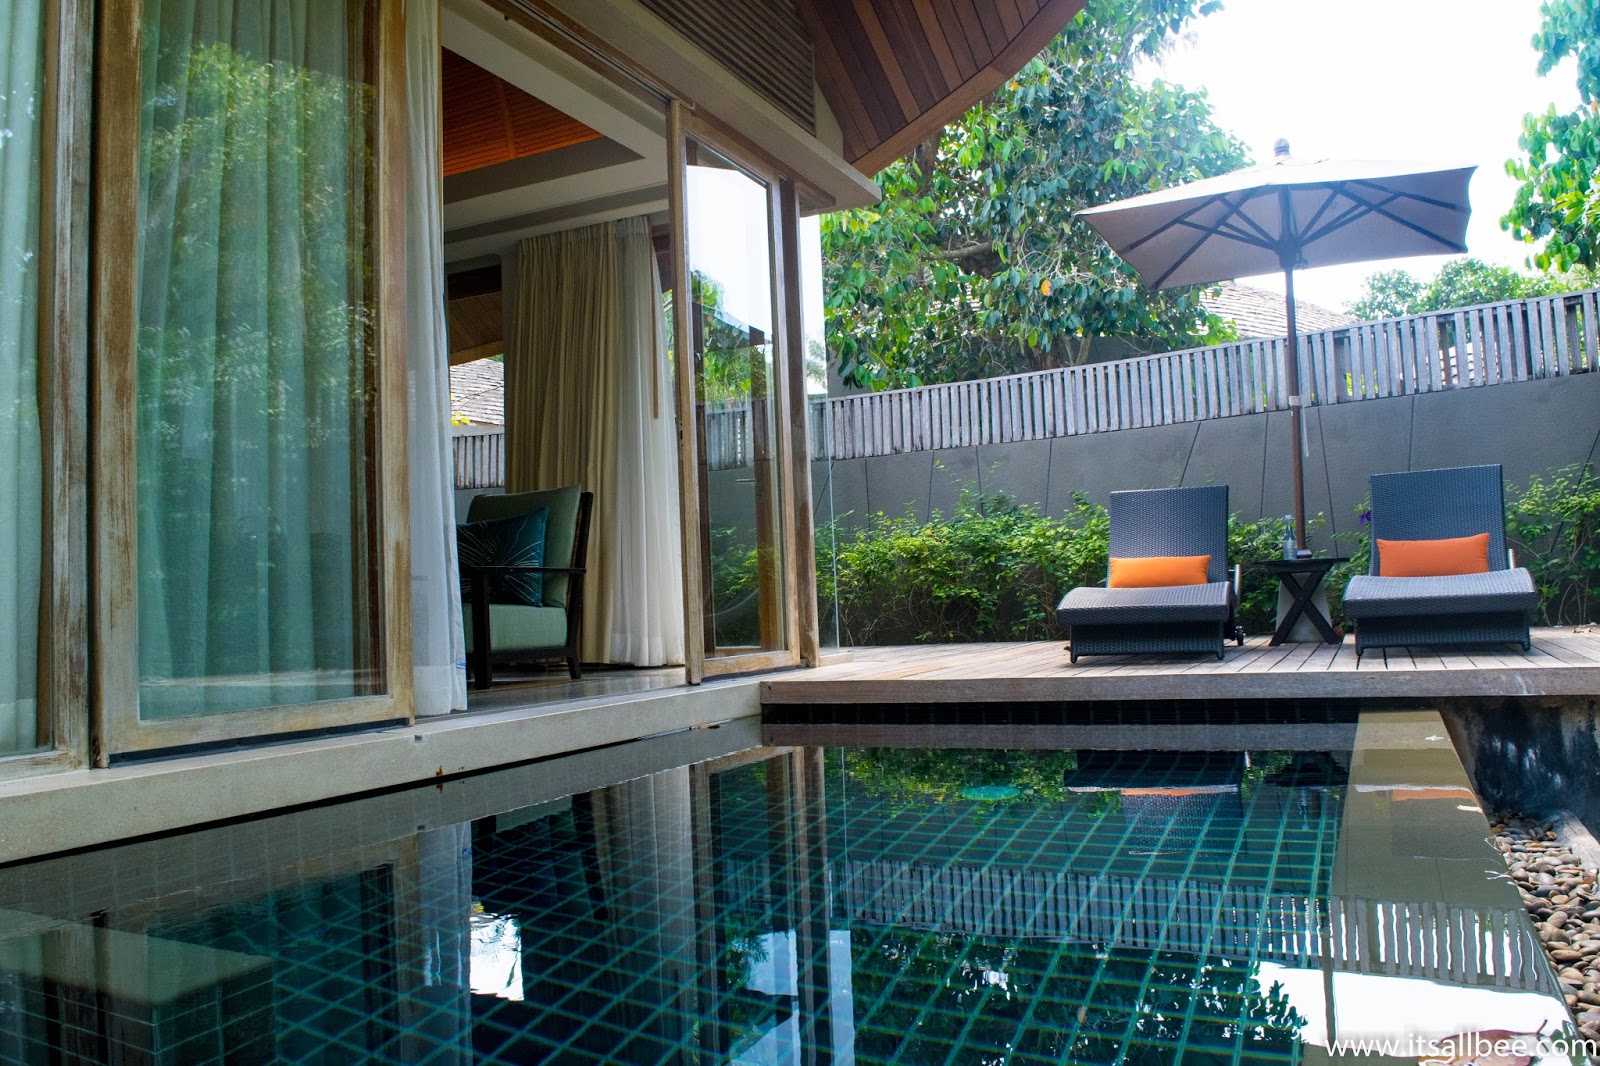 Luxury hotels in Phuket | Phuket resorts with private pools